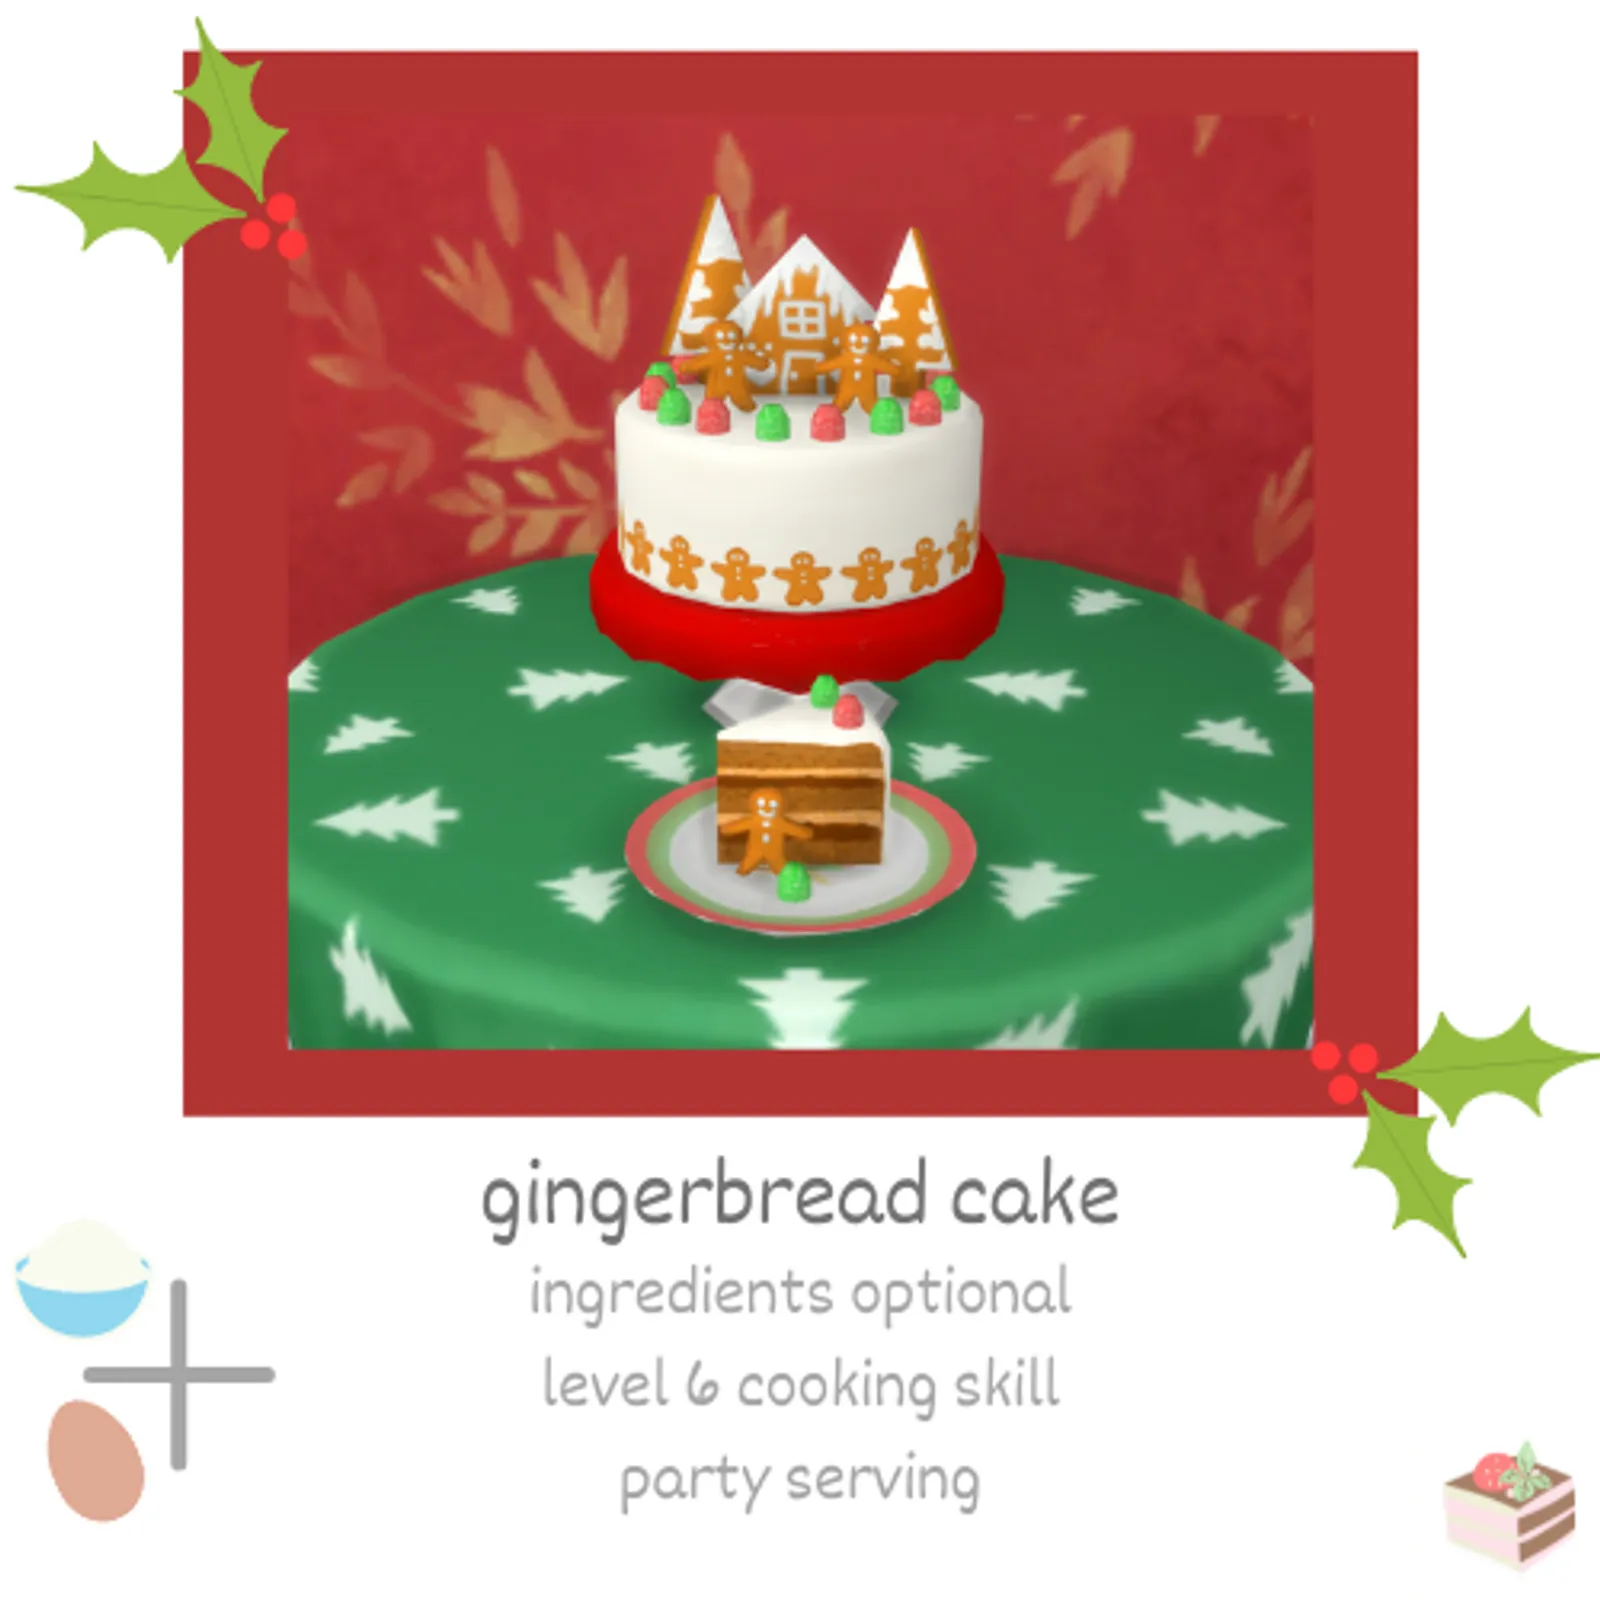 gingerbread cake - 